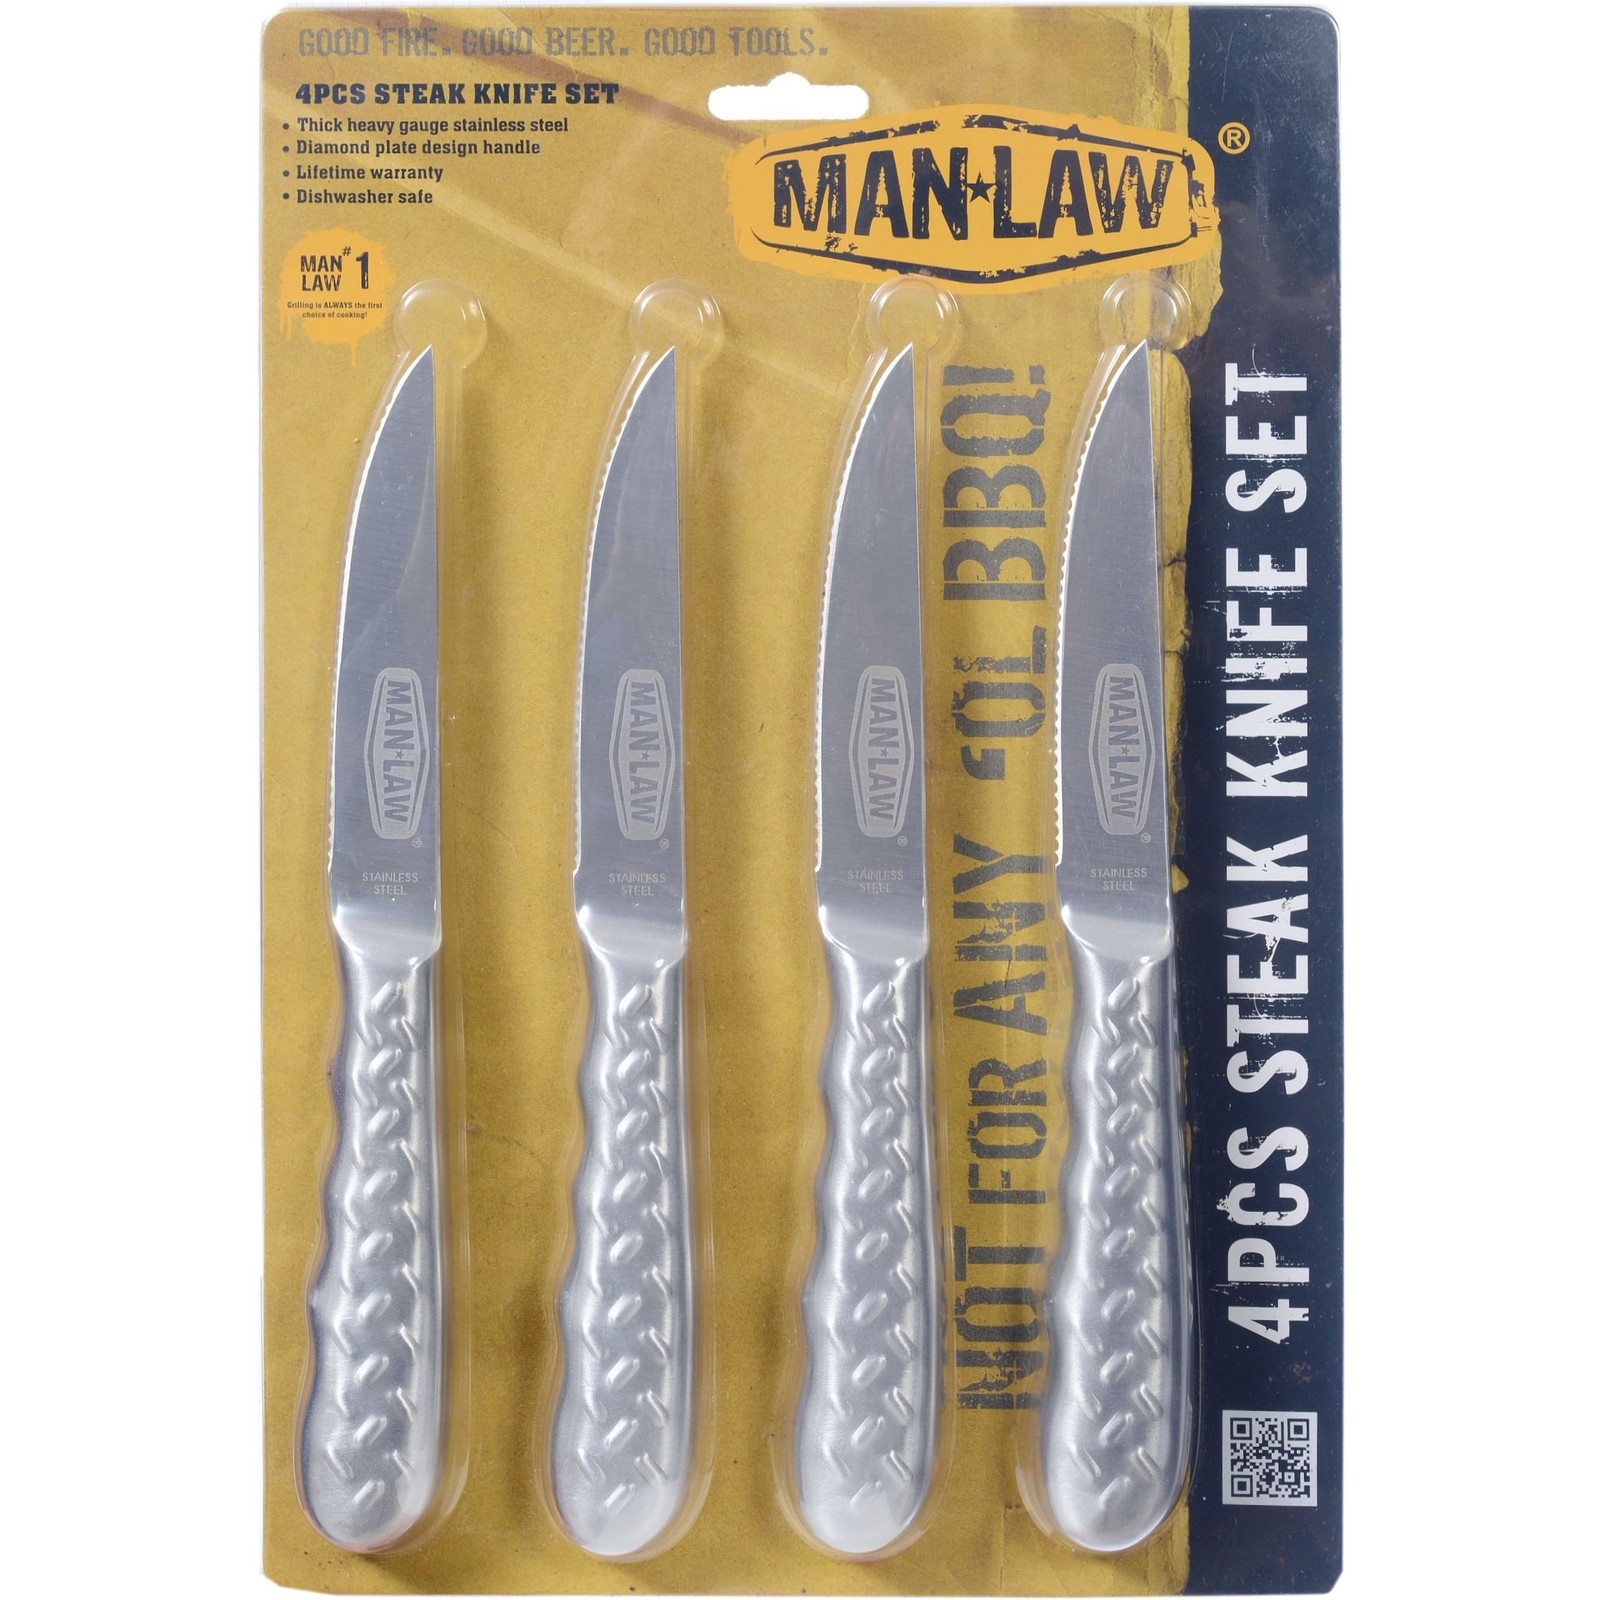 Man Law Diamond Plate Steak Knives - set of 4